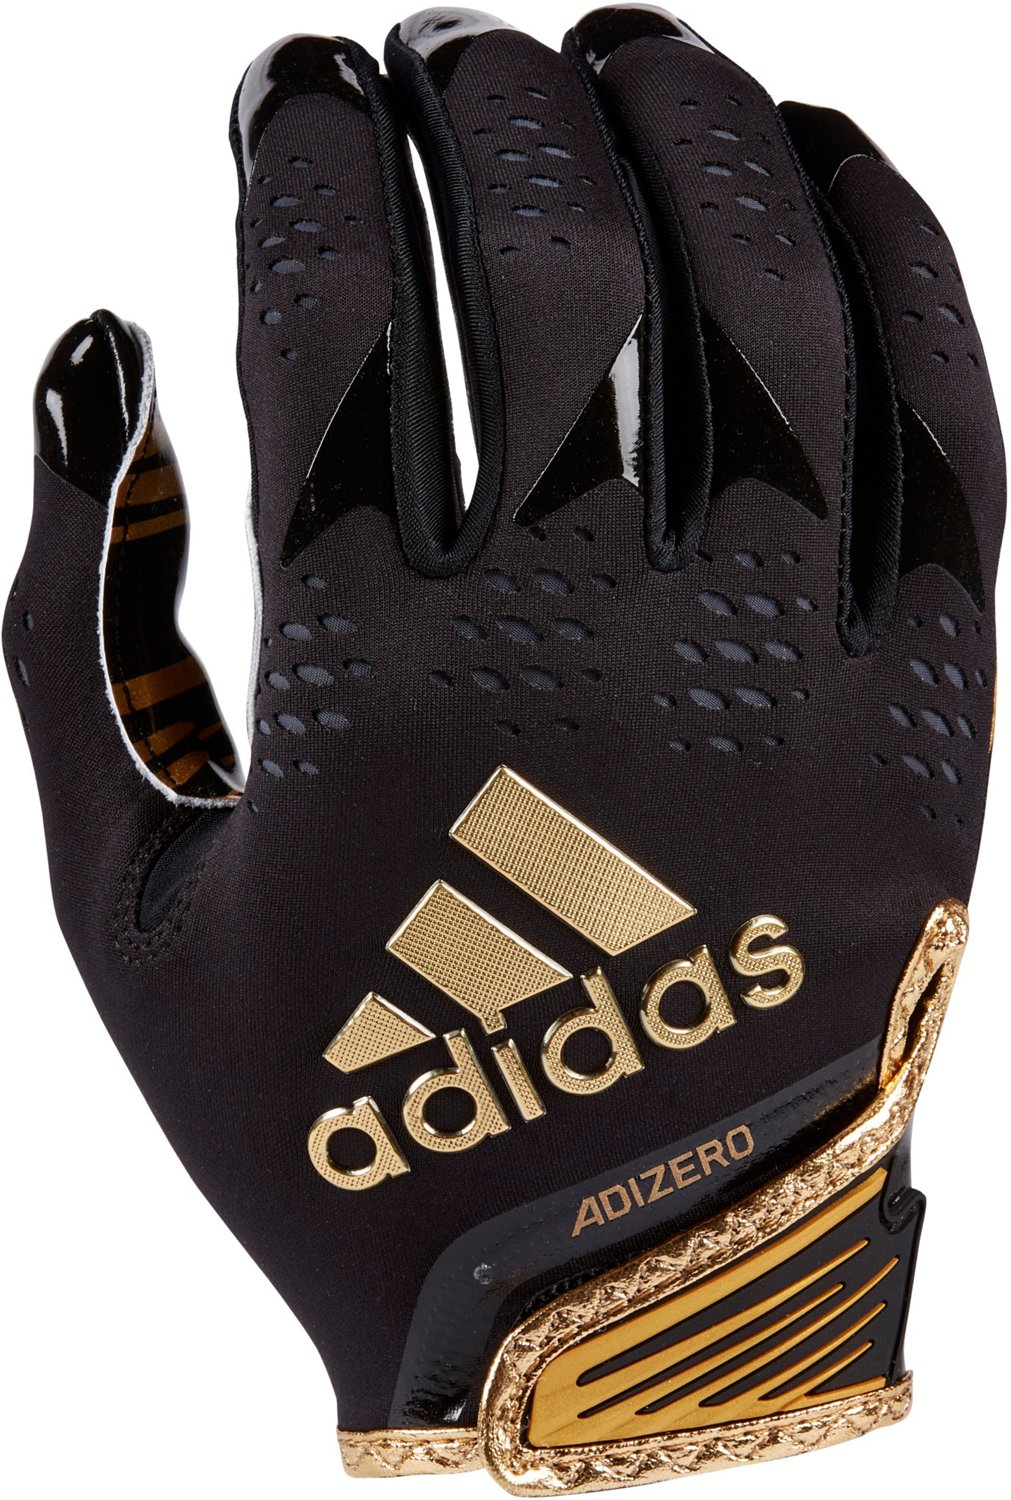 Adidas AdiZero 12 Big Mood Receiver Gloves Adult | lupon.gov.ph